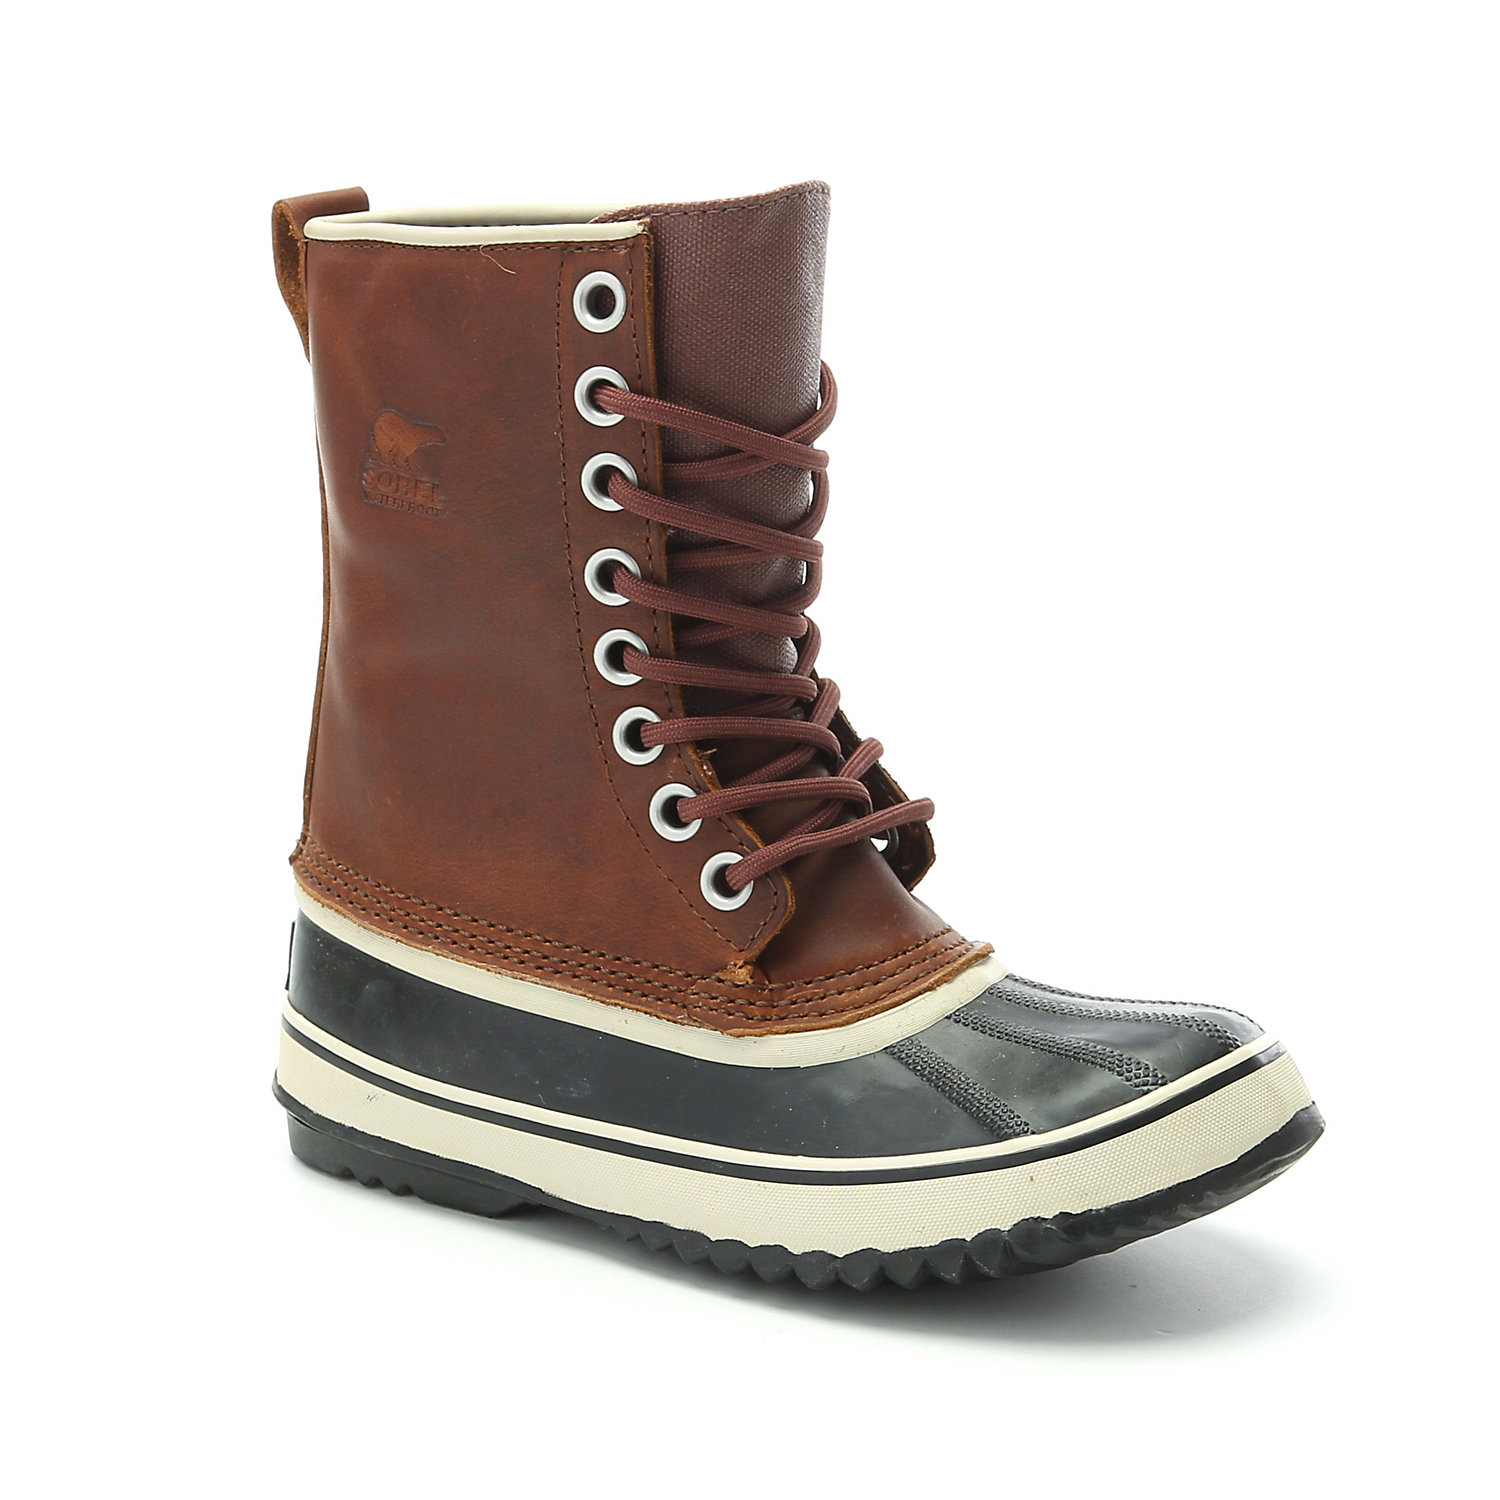 Sorel Womens 1964 Premium Leather Boot Select SZ/Color. 